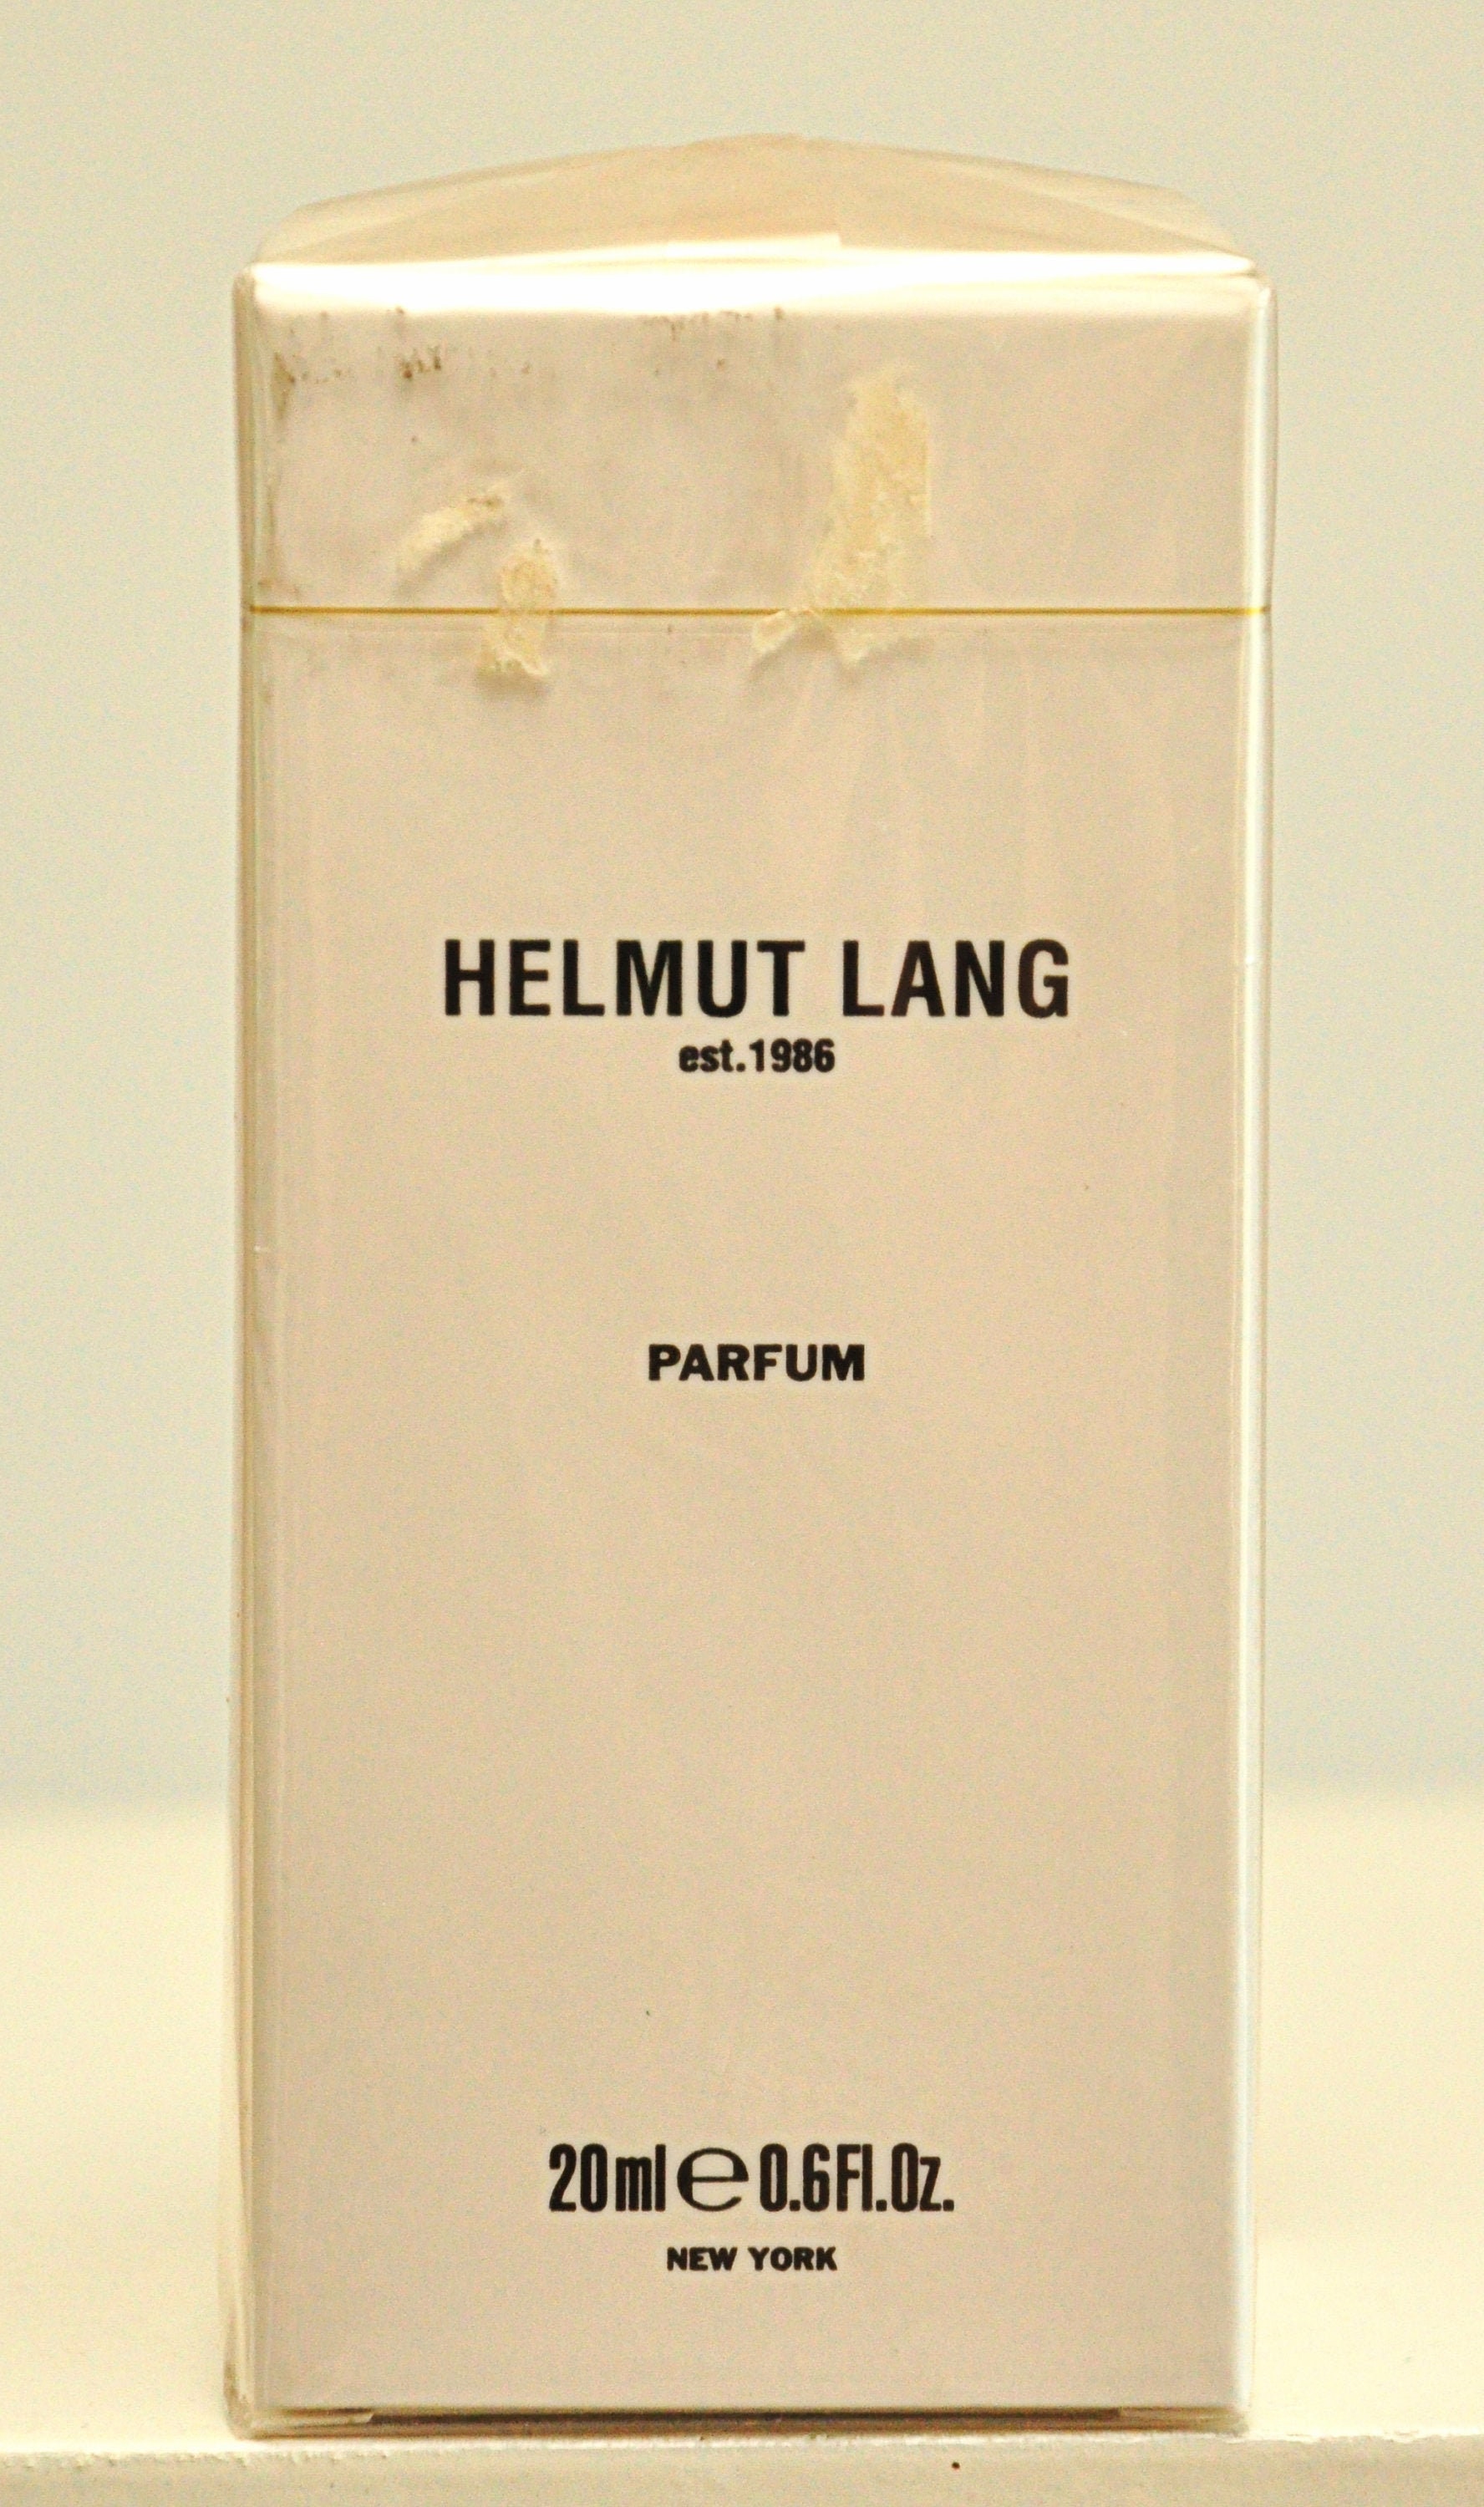 Helmut Lang's Vienna Pen Pal